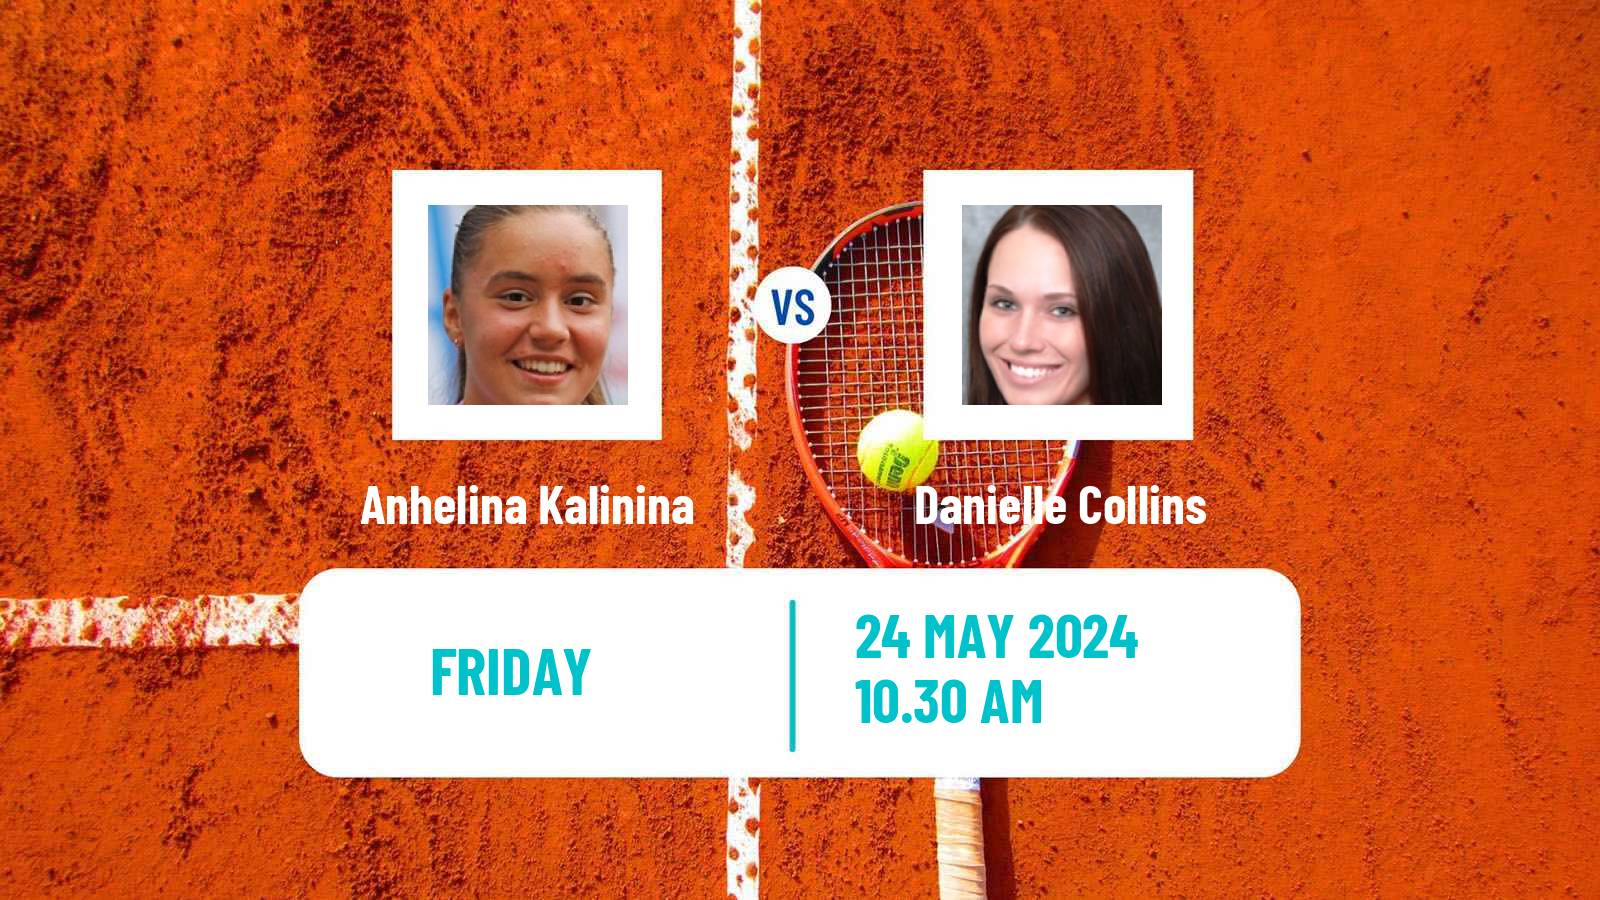 Tennis WTA Strasbourg Anhelina Kalinina - Danielle Collins